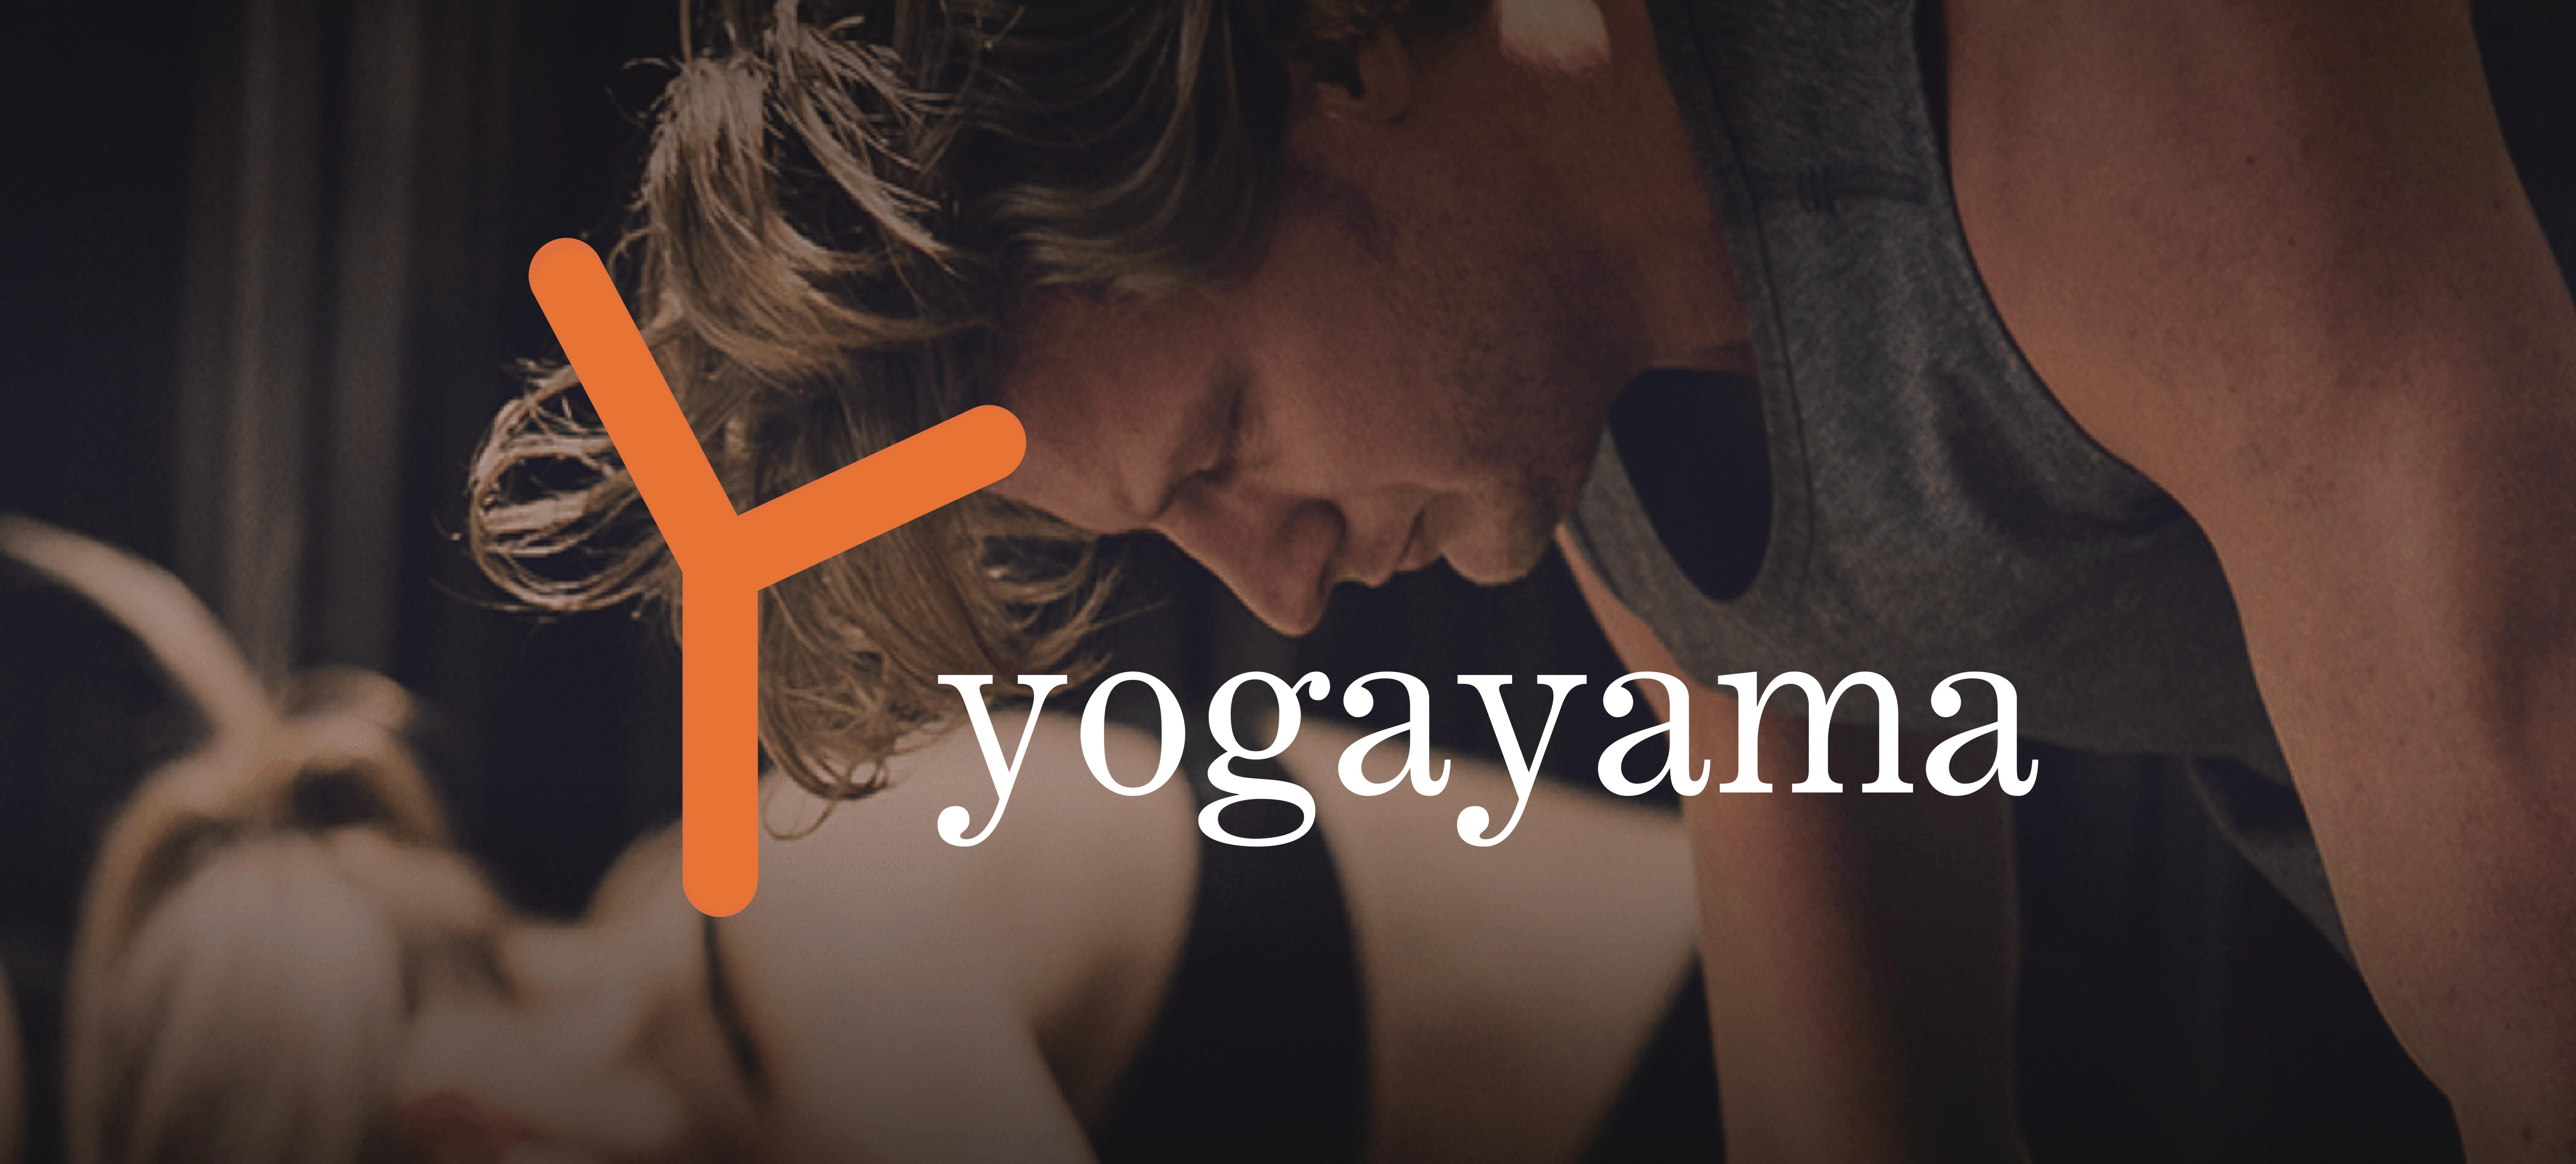 Yogayama kortbild